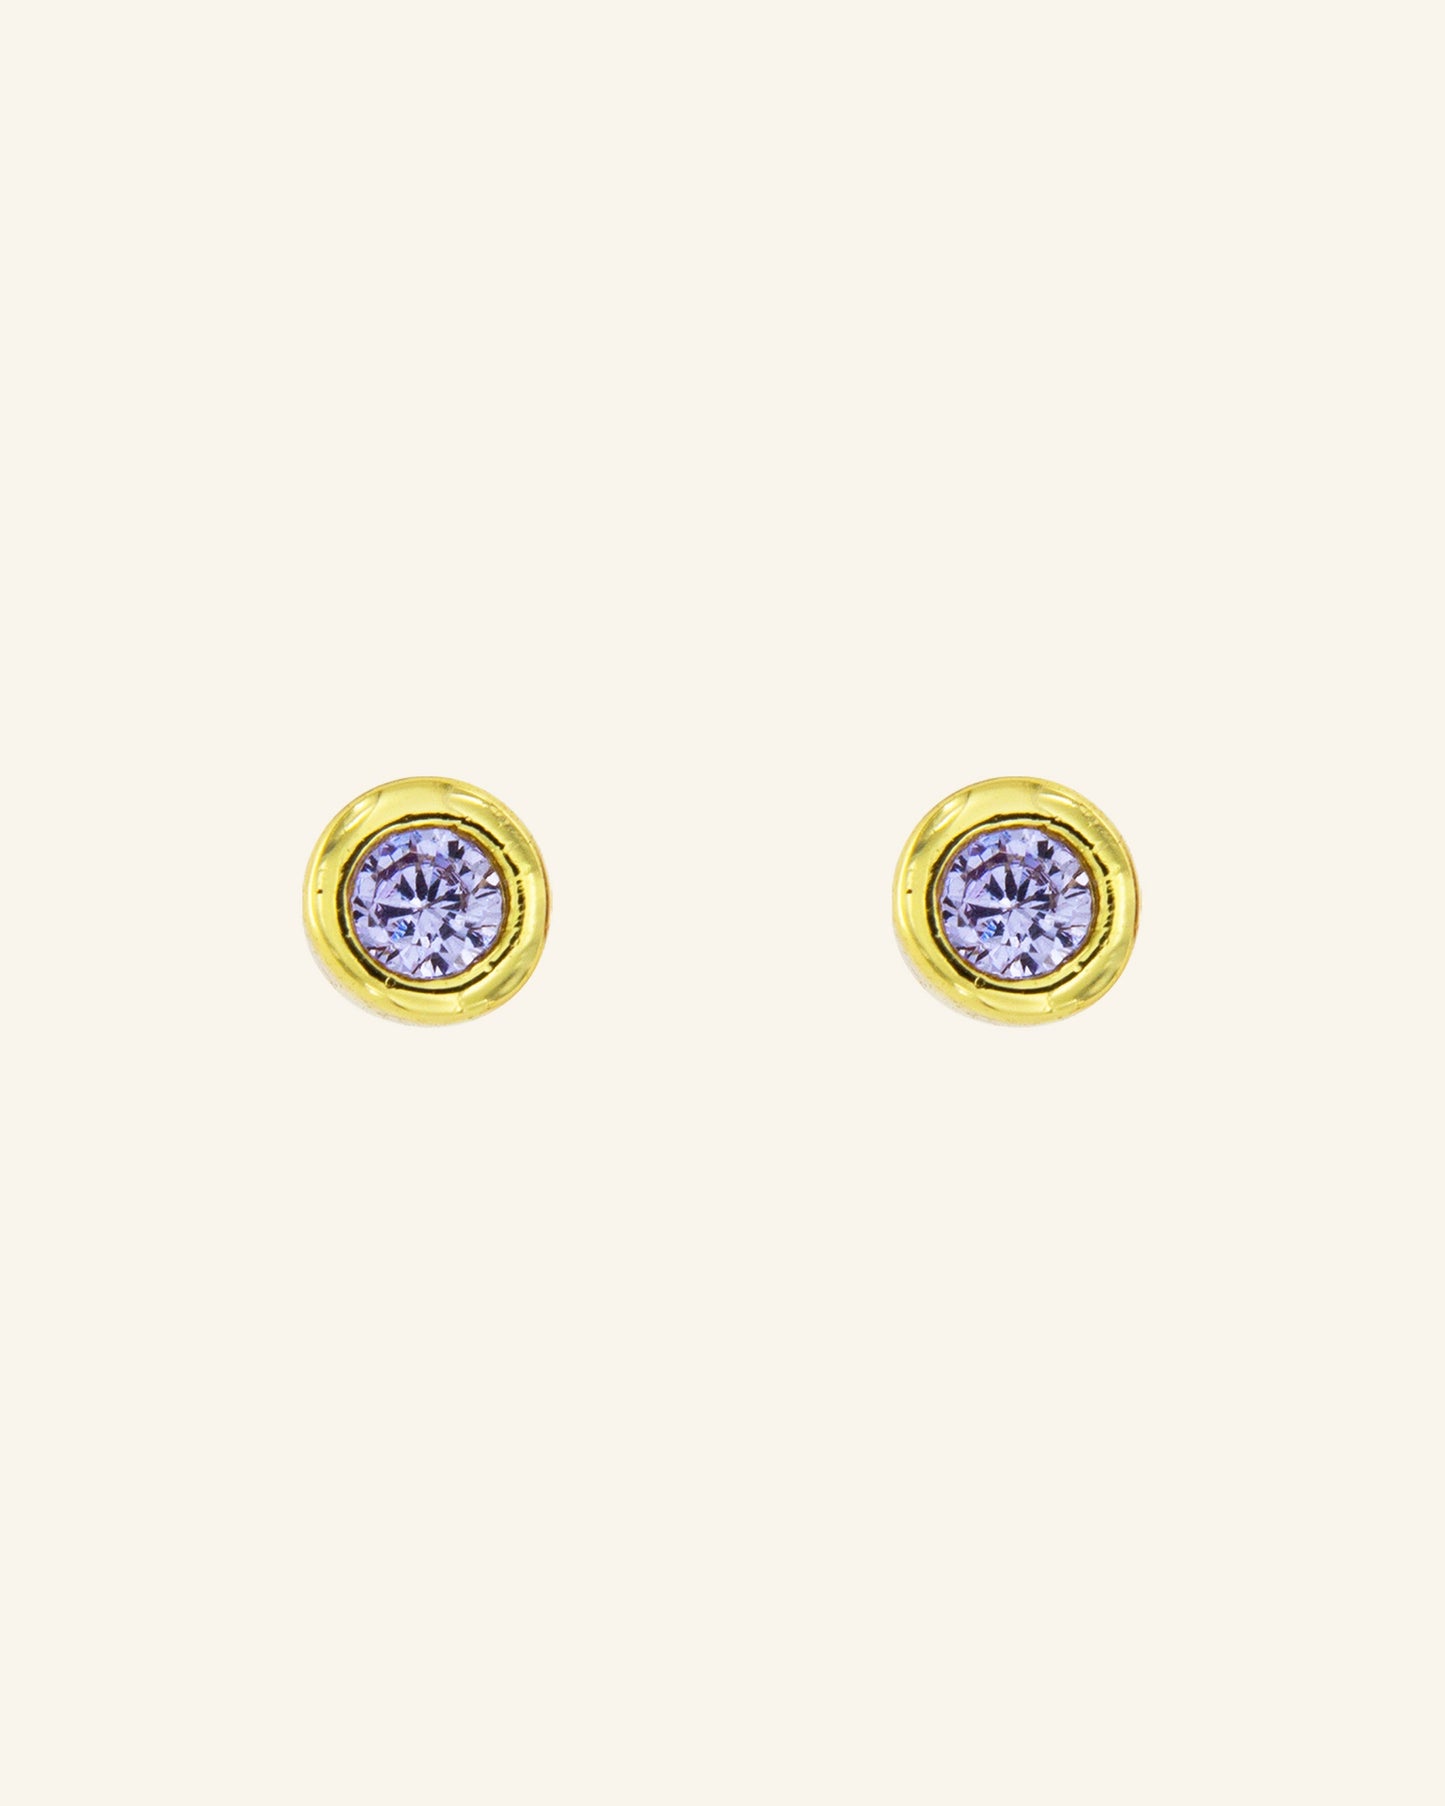 Lavender Robinson Earrings